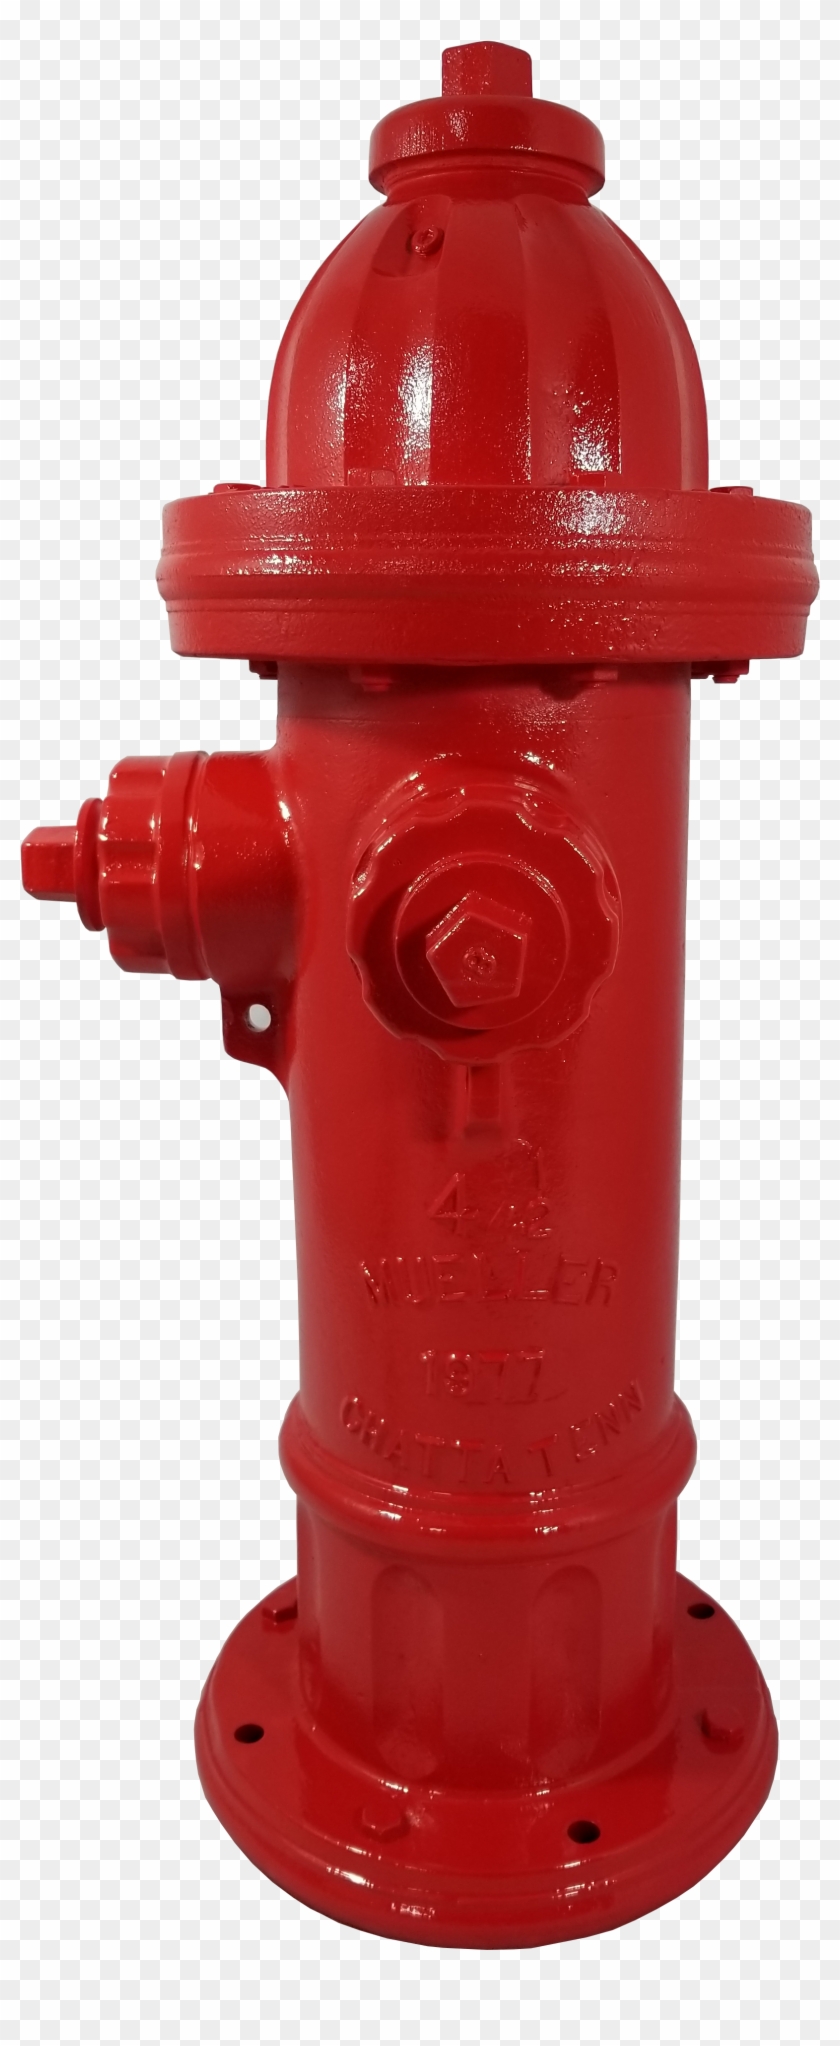 Spray Fire Hydrant - Fire Hydrant #593364